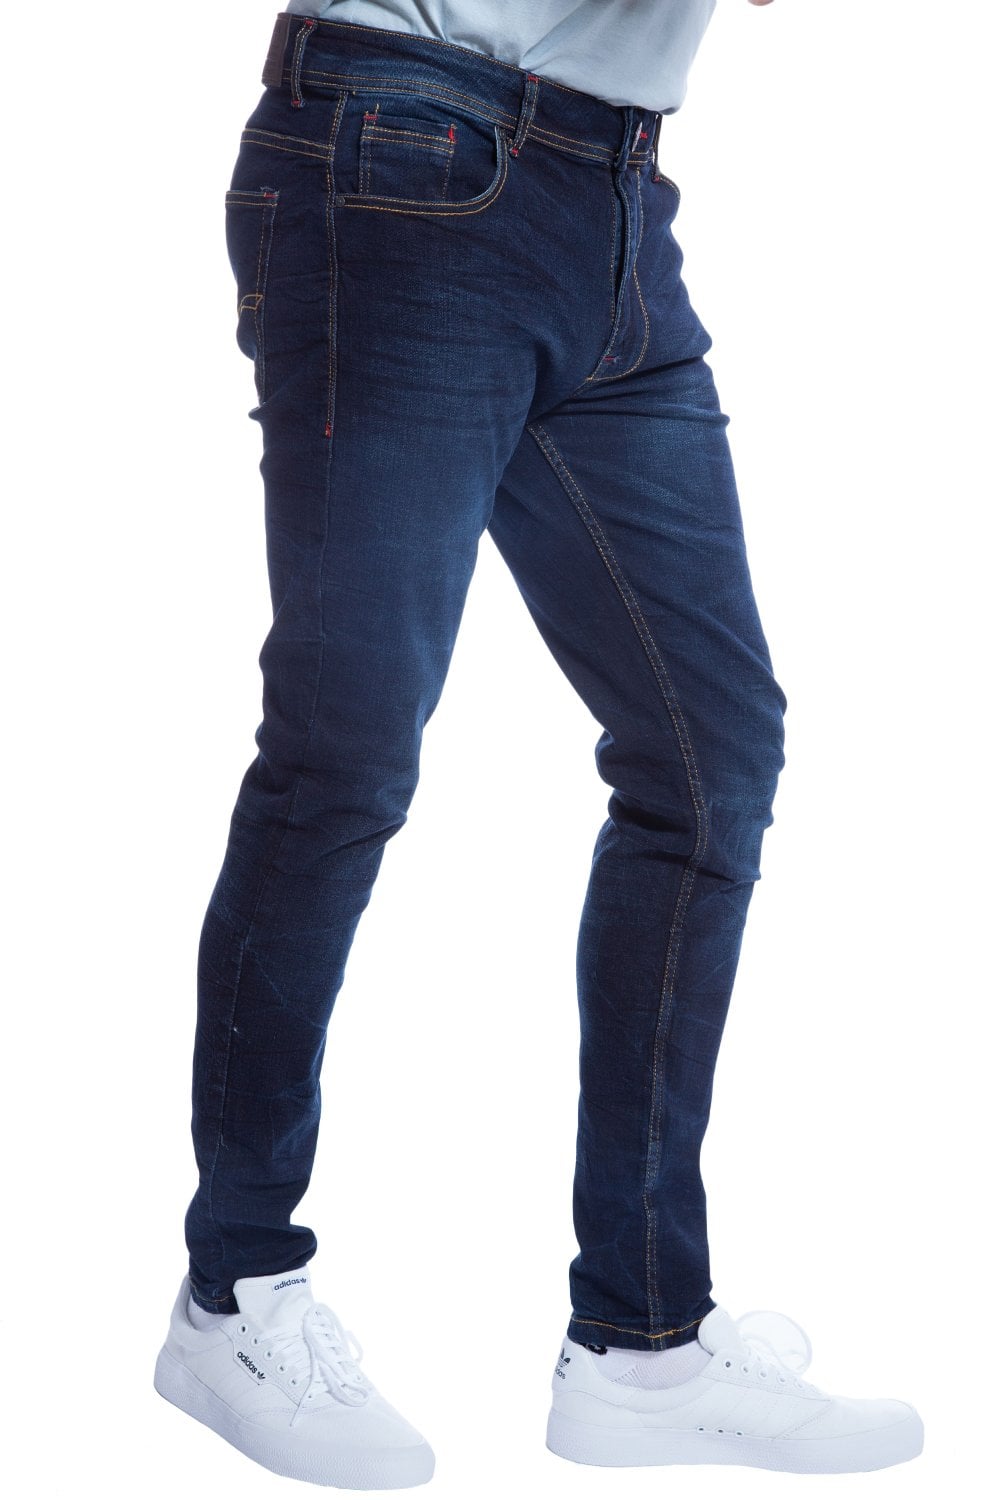 Slim Fit Jeans - Shop 2 for £35